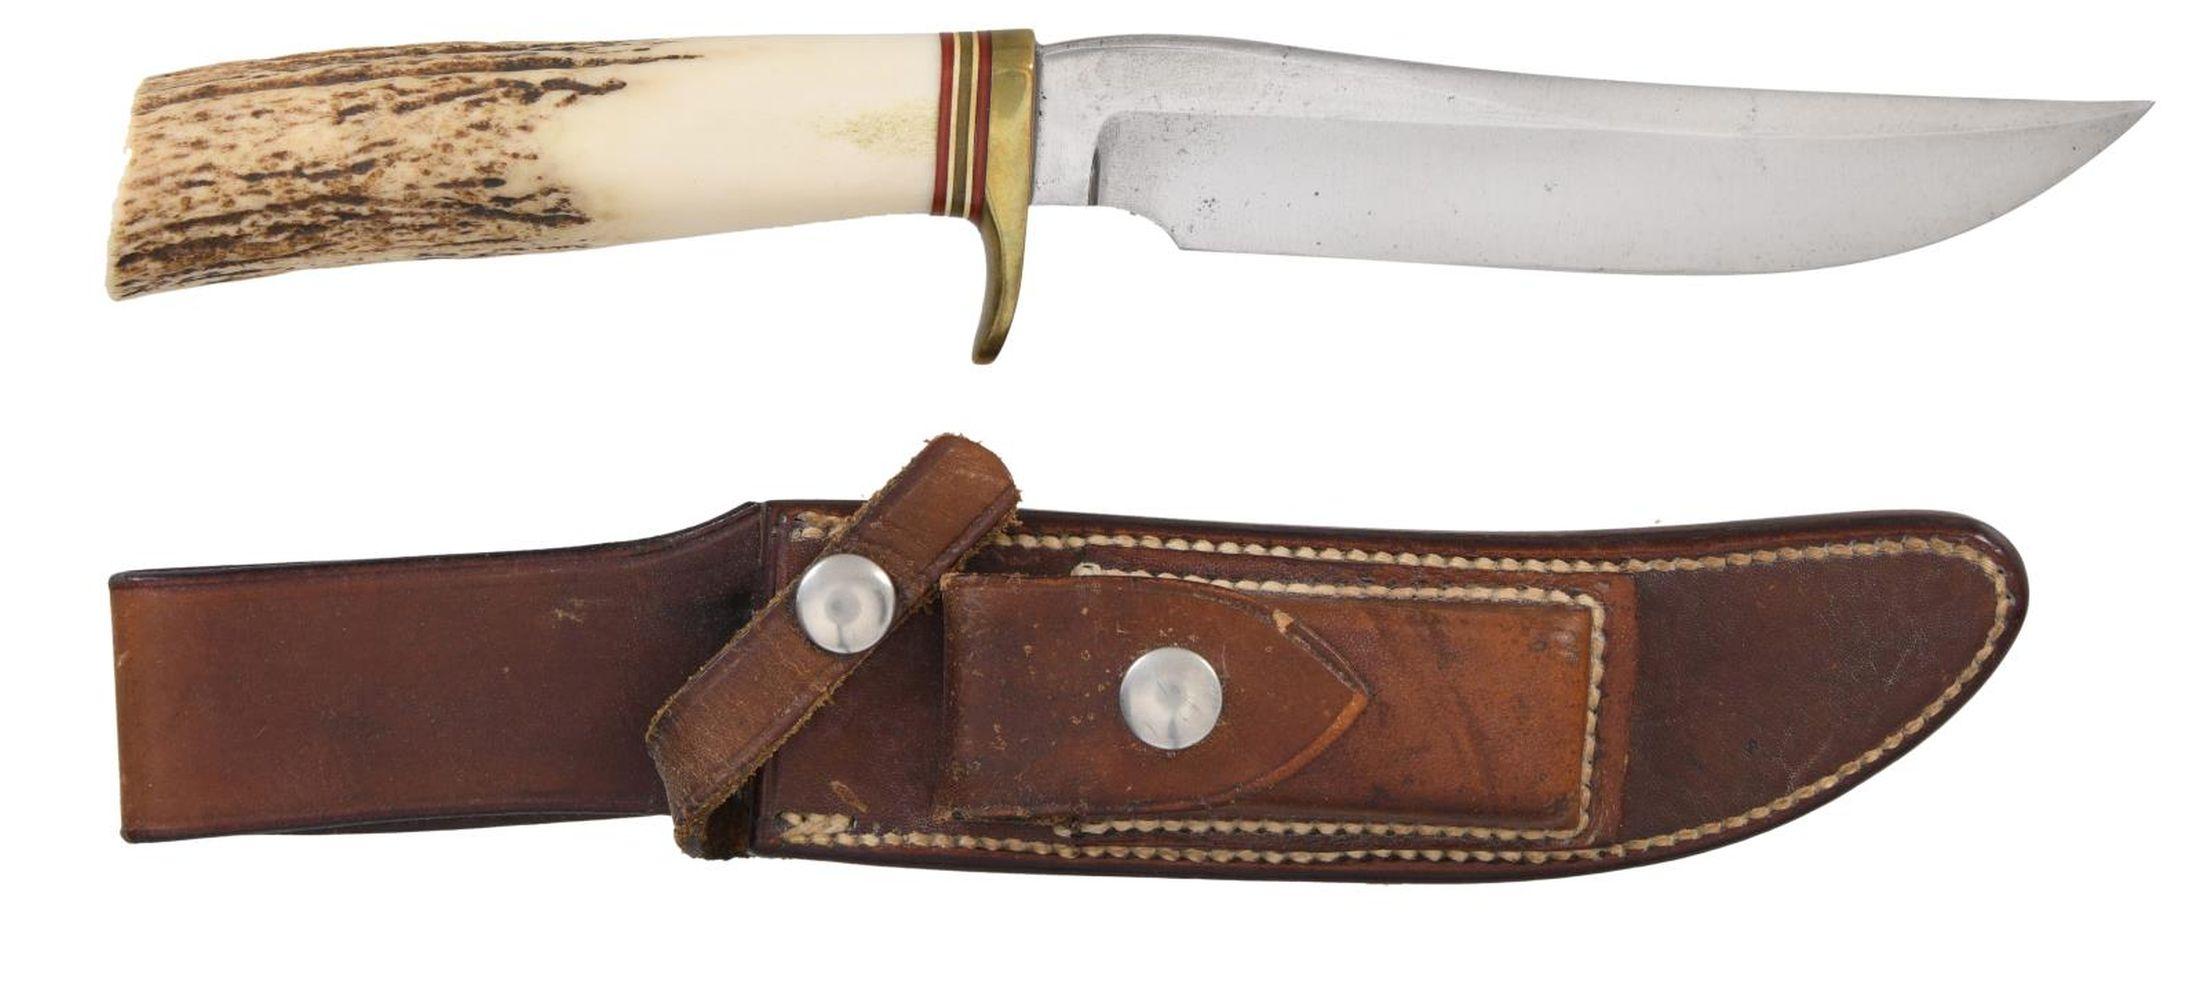 RANDALL MADE MODEL 3 - 6" KNIFE WITH SHEATH.